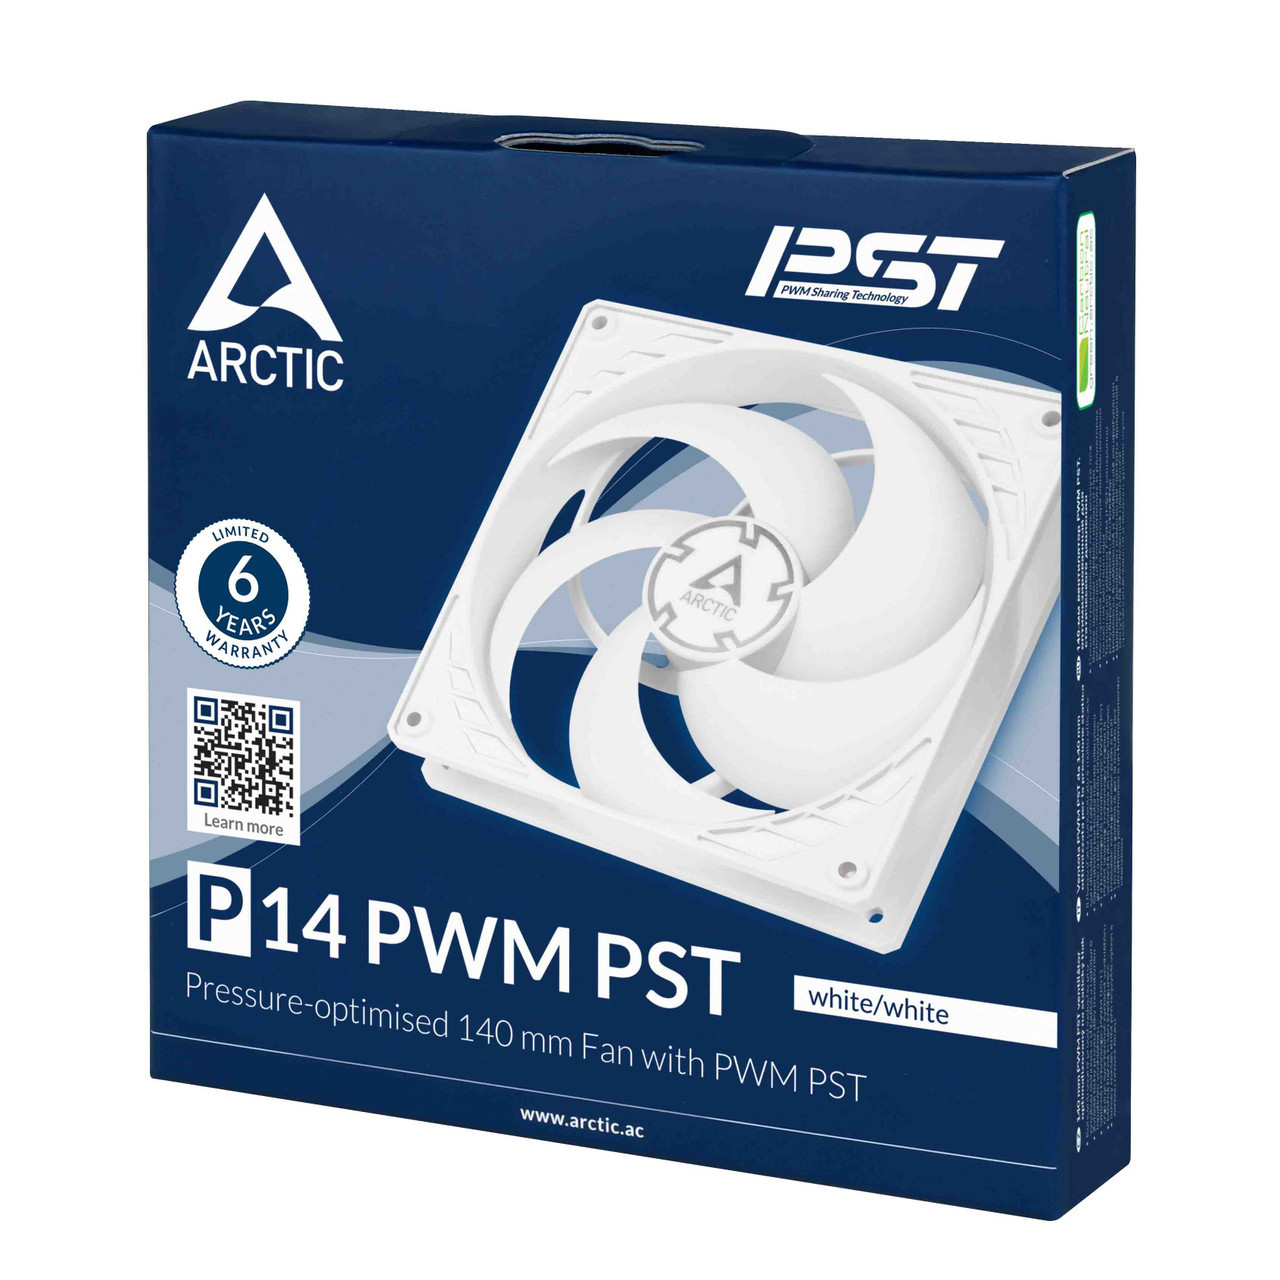 ARCTIC ACFAN00197A P14 PWM PST 140mm PWM PST Case Fan, Pressure-optimised,  200–1700 RPM - White